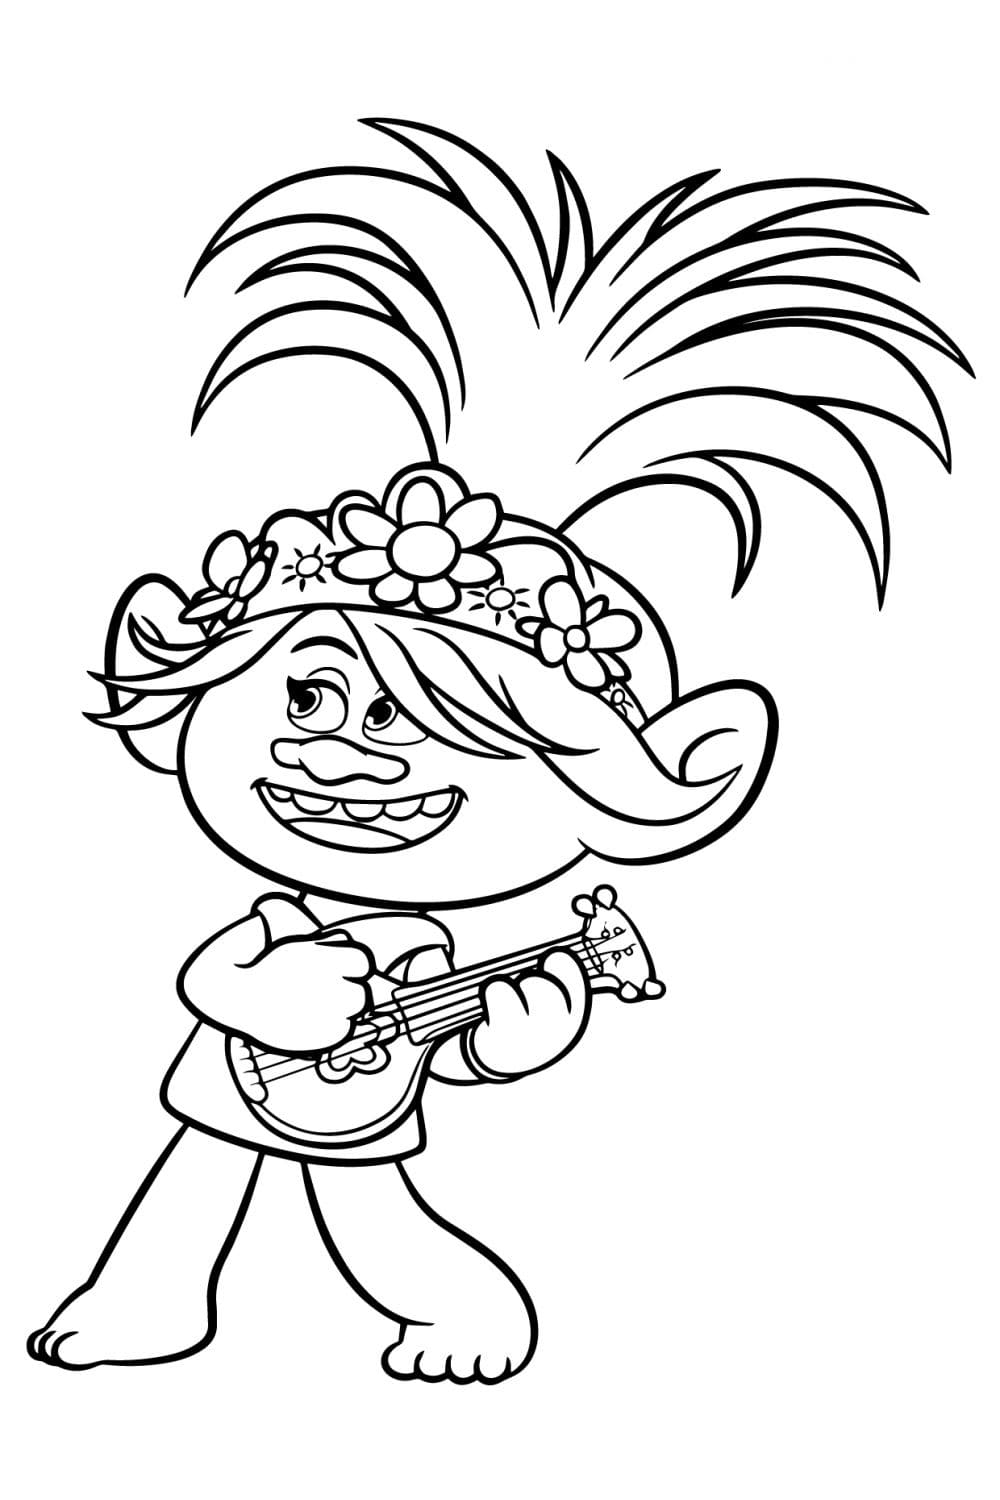 Princesse Poppy Qui Chante coloring page